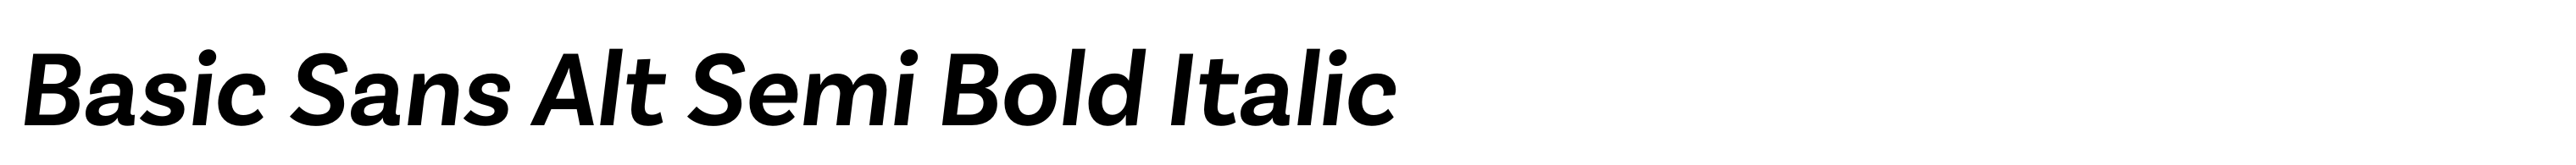 Basic Sans Alt Semi Bold Italic